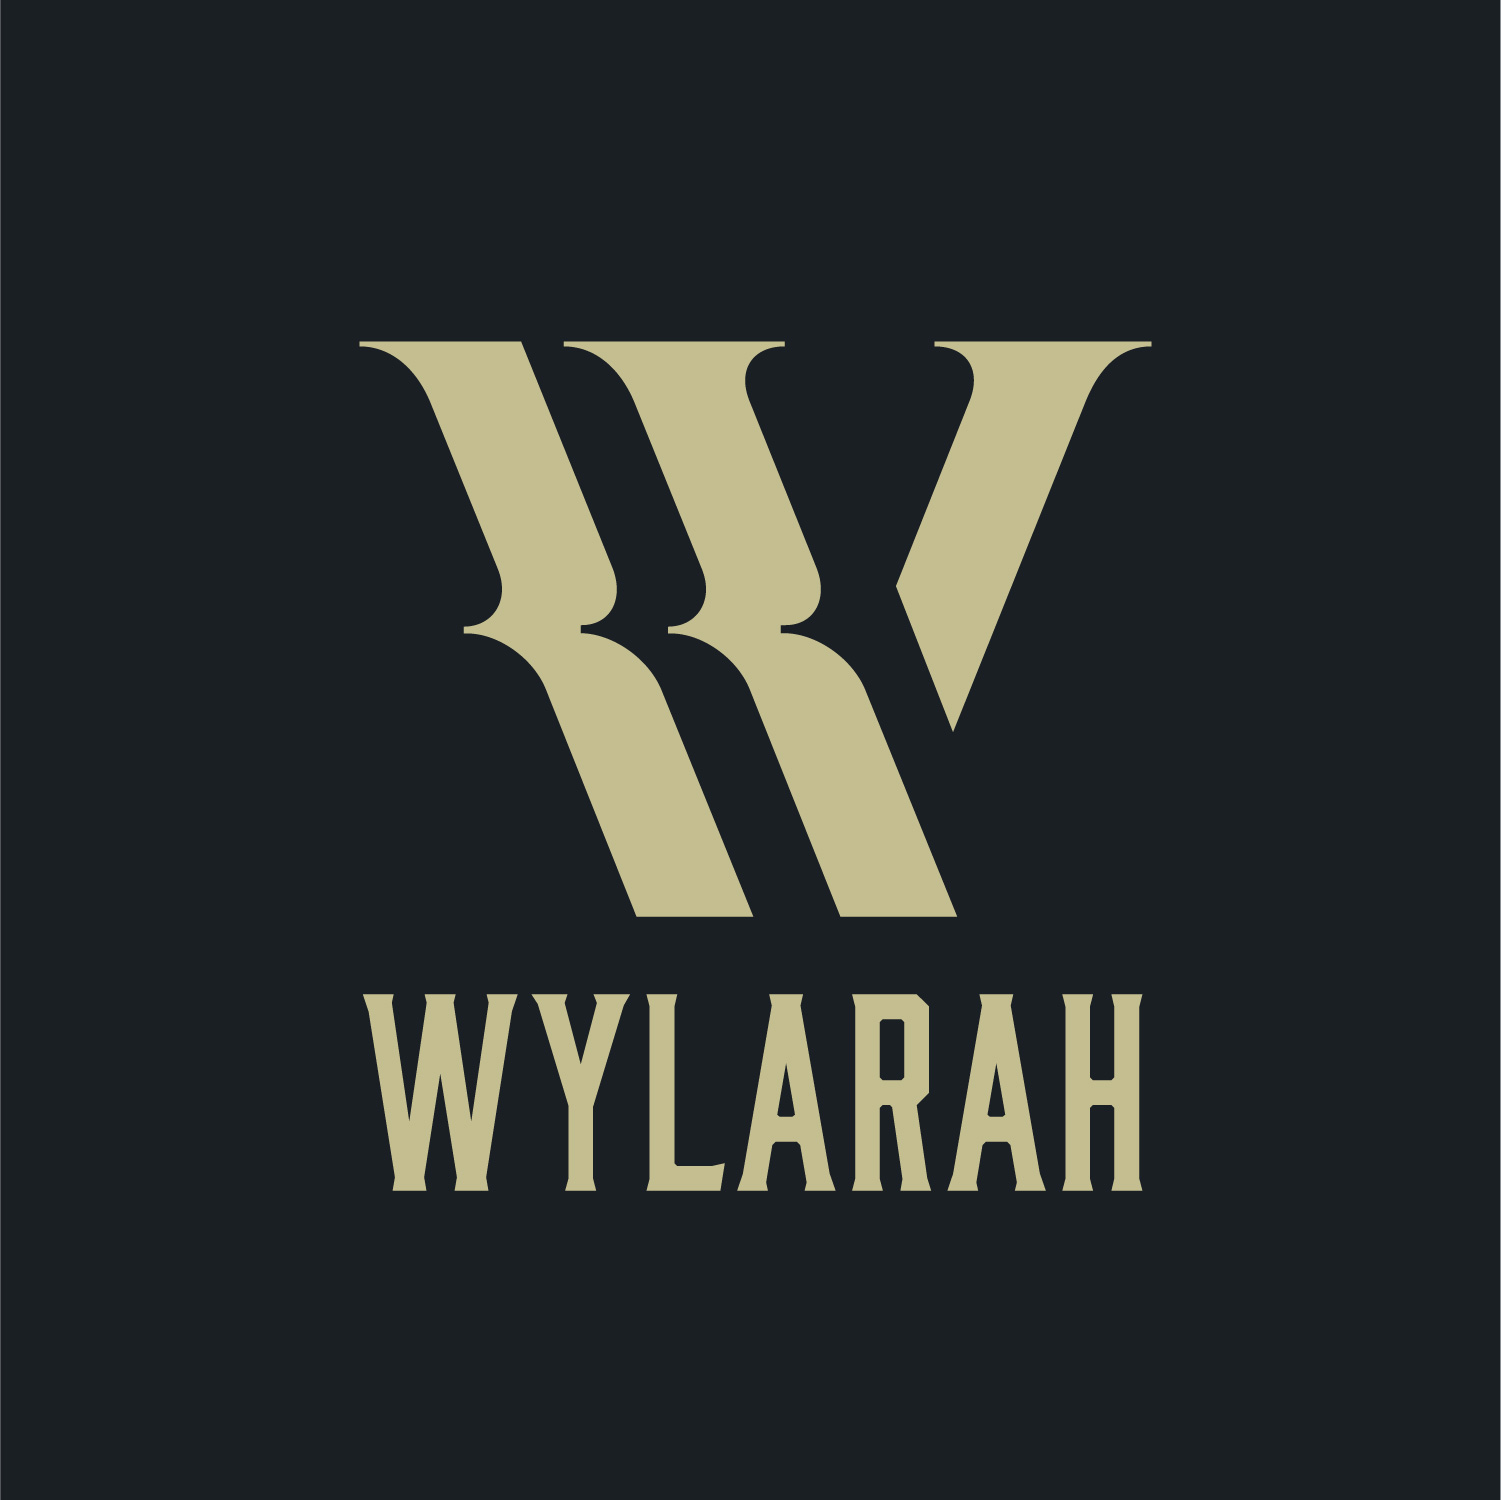 Wylarah